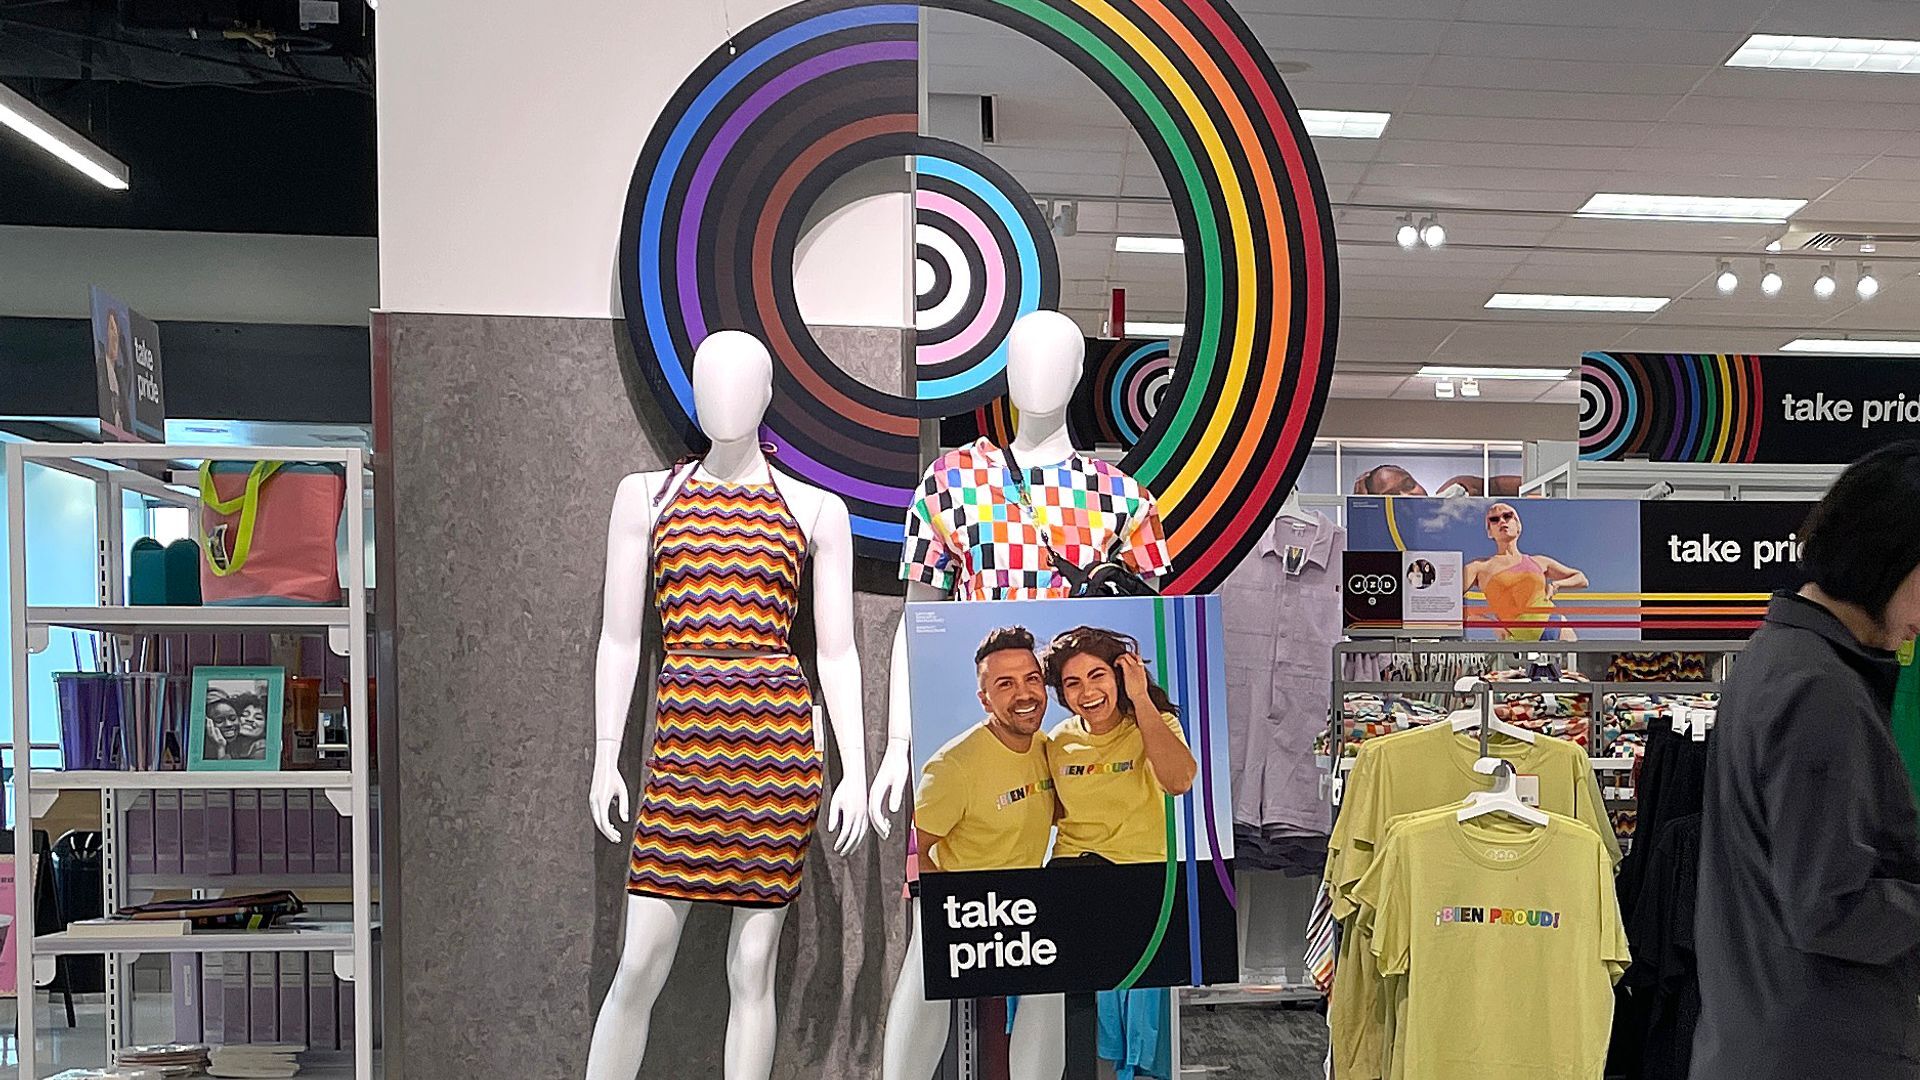 Target cites Pride merch protests in sales drop report, other retailers